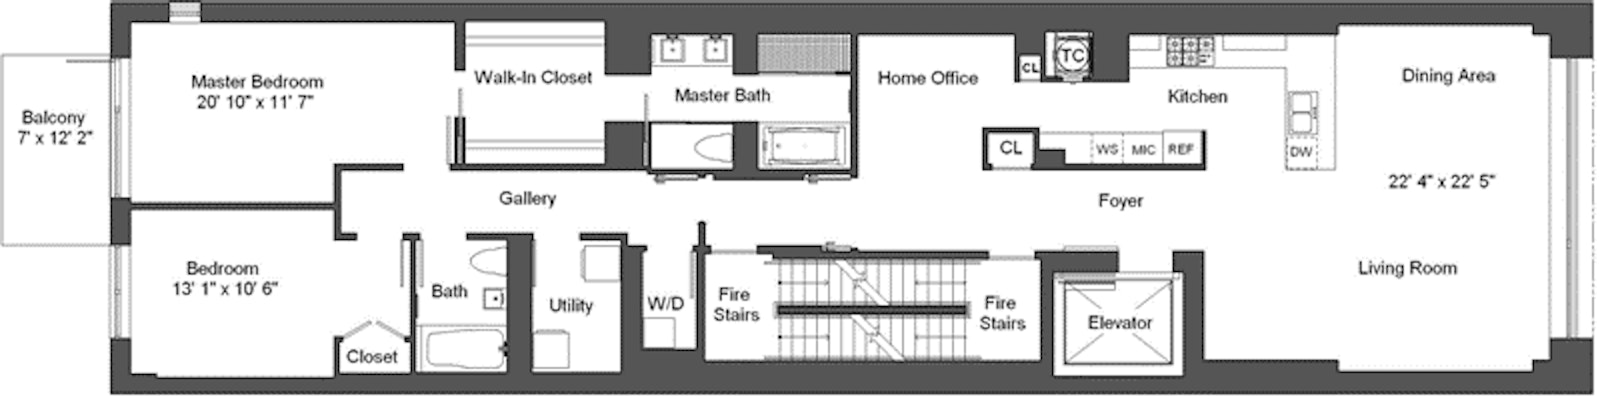 Floorplan for 333 West 14th Street, 3